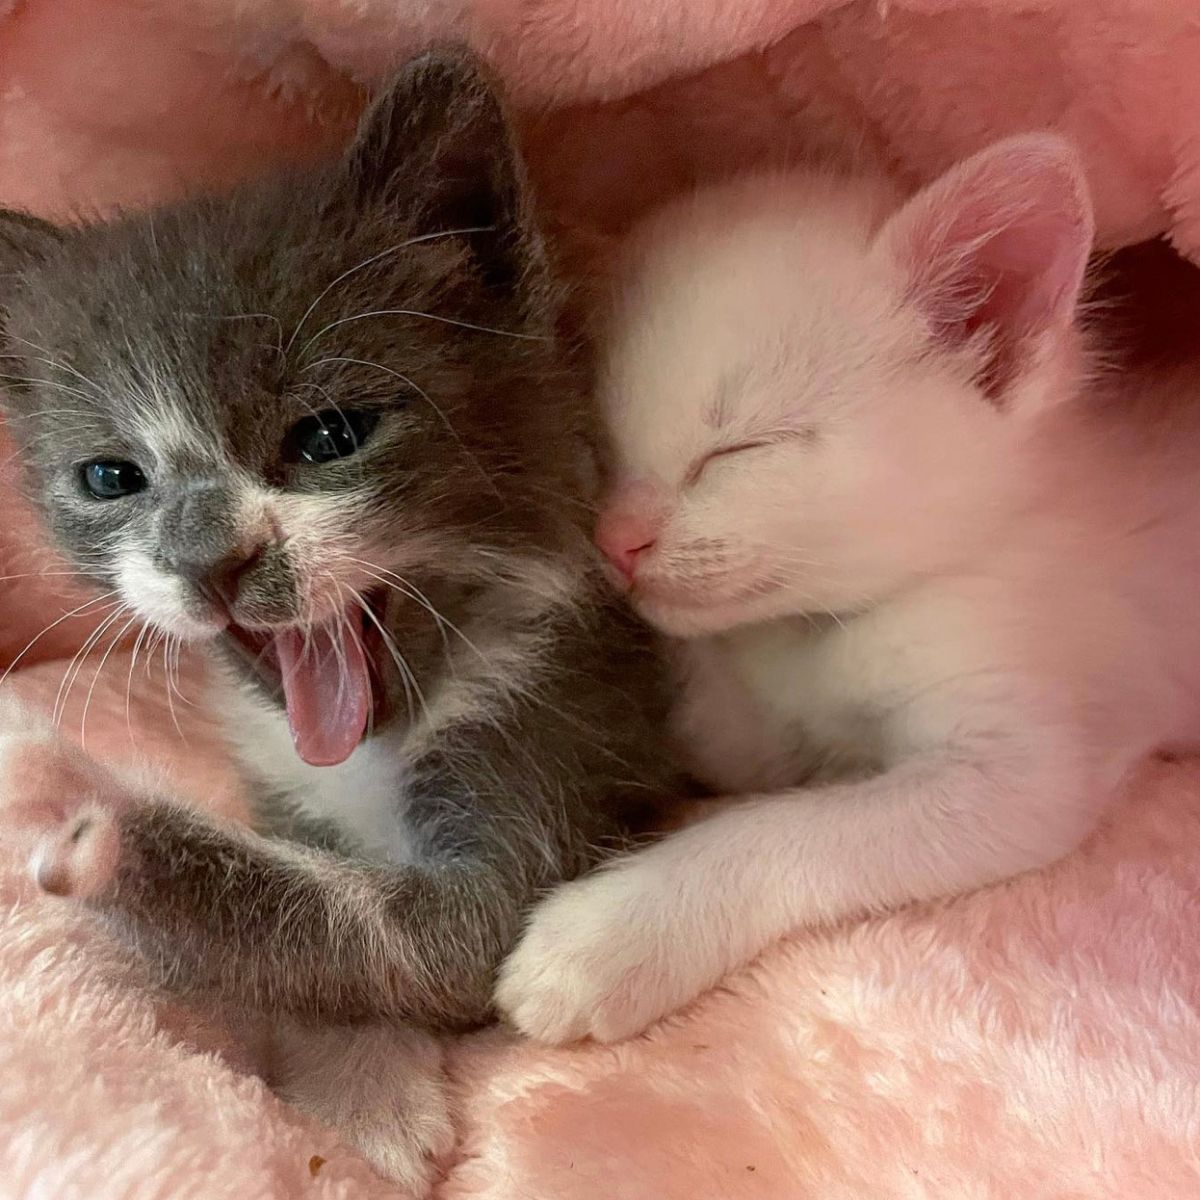 kittens in a pink blanket